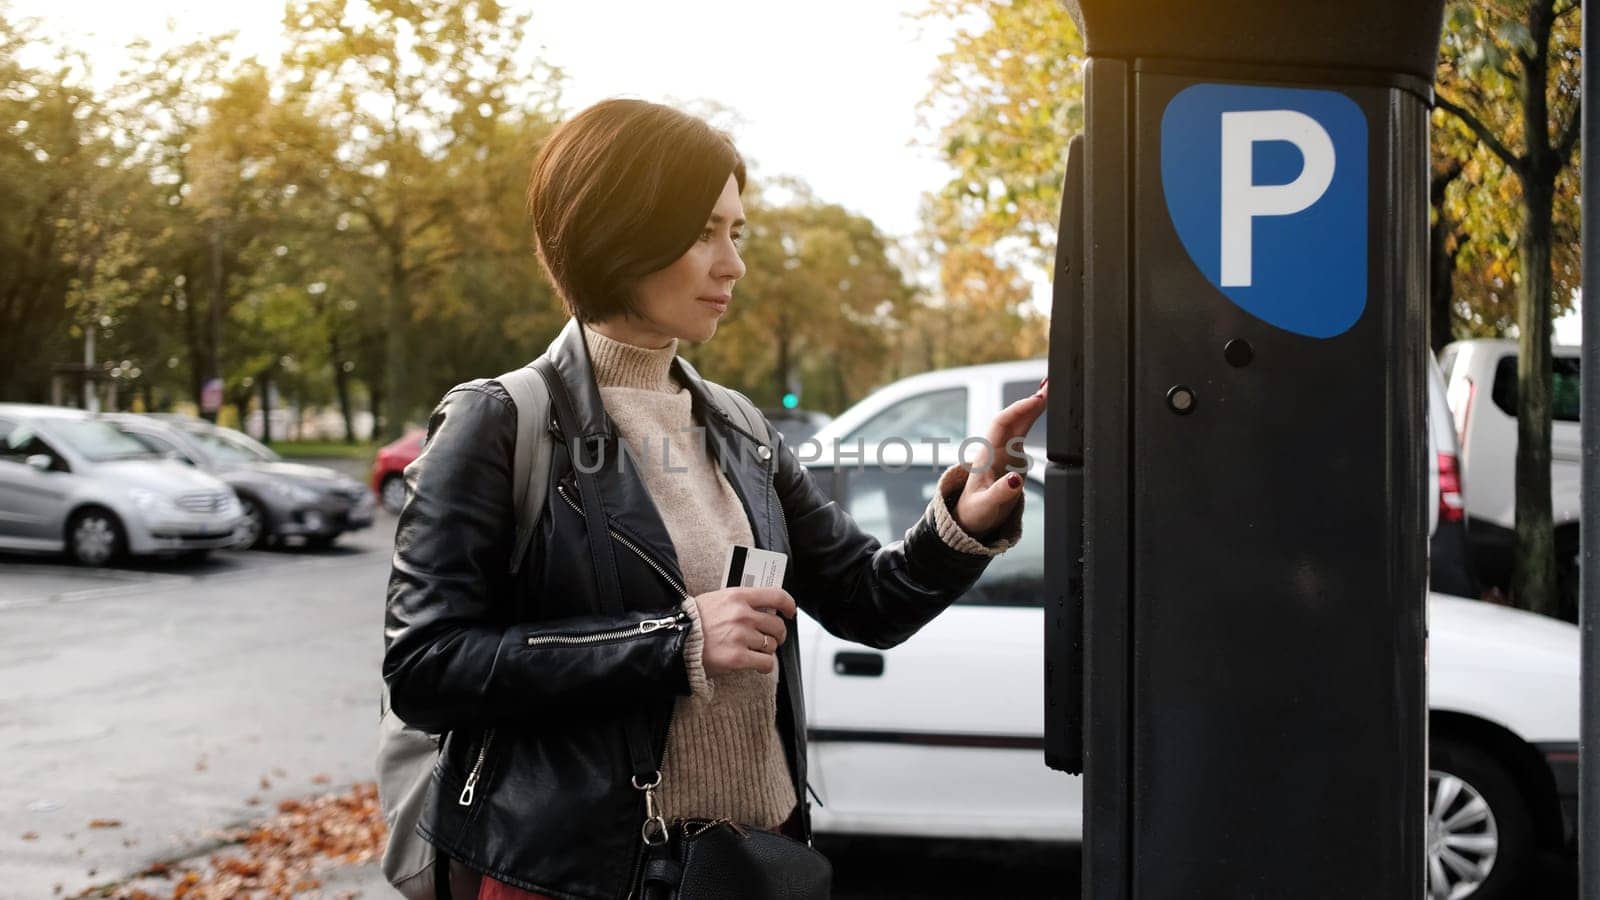 Woman Pays For Parking At Meter by GekaSkr